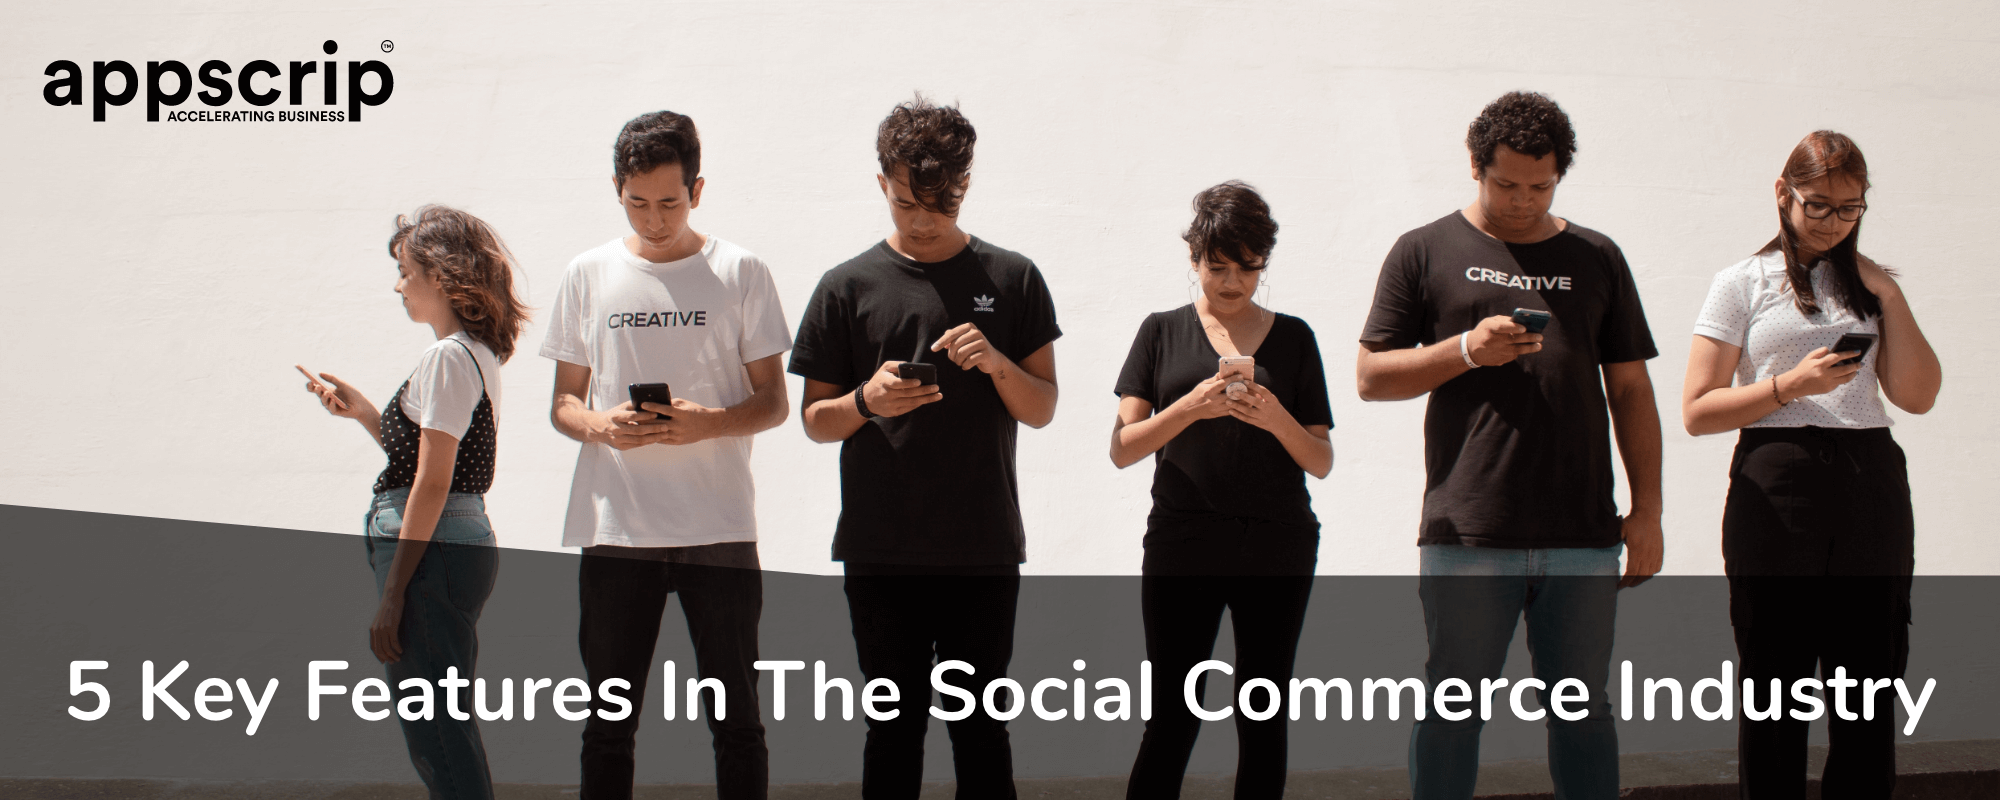 Social Commerce Industry